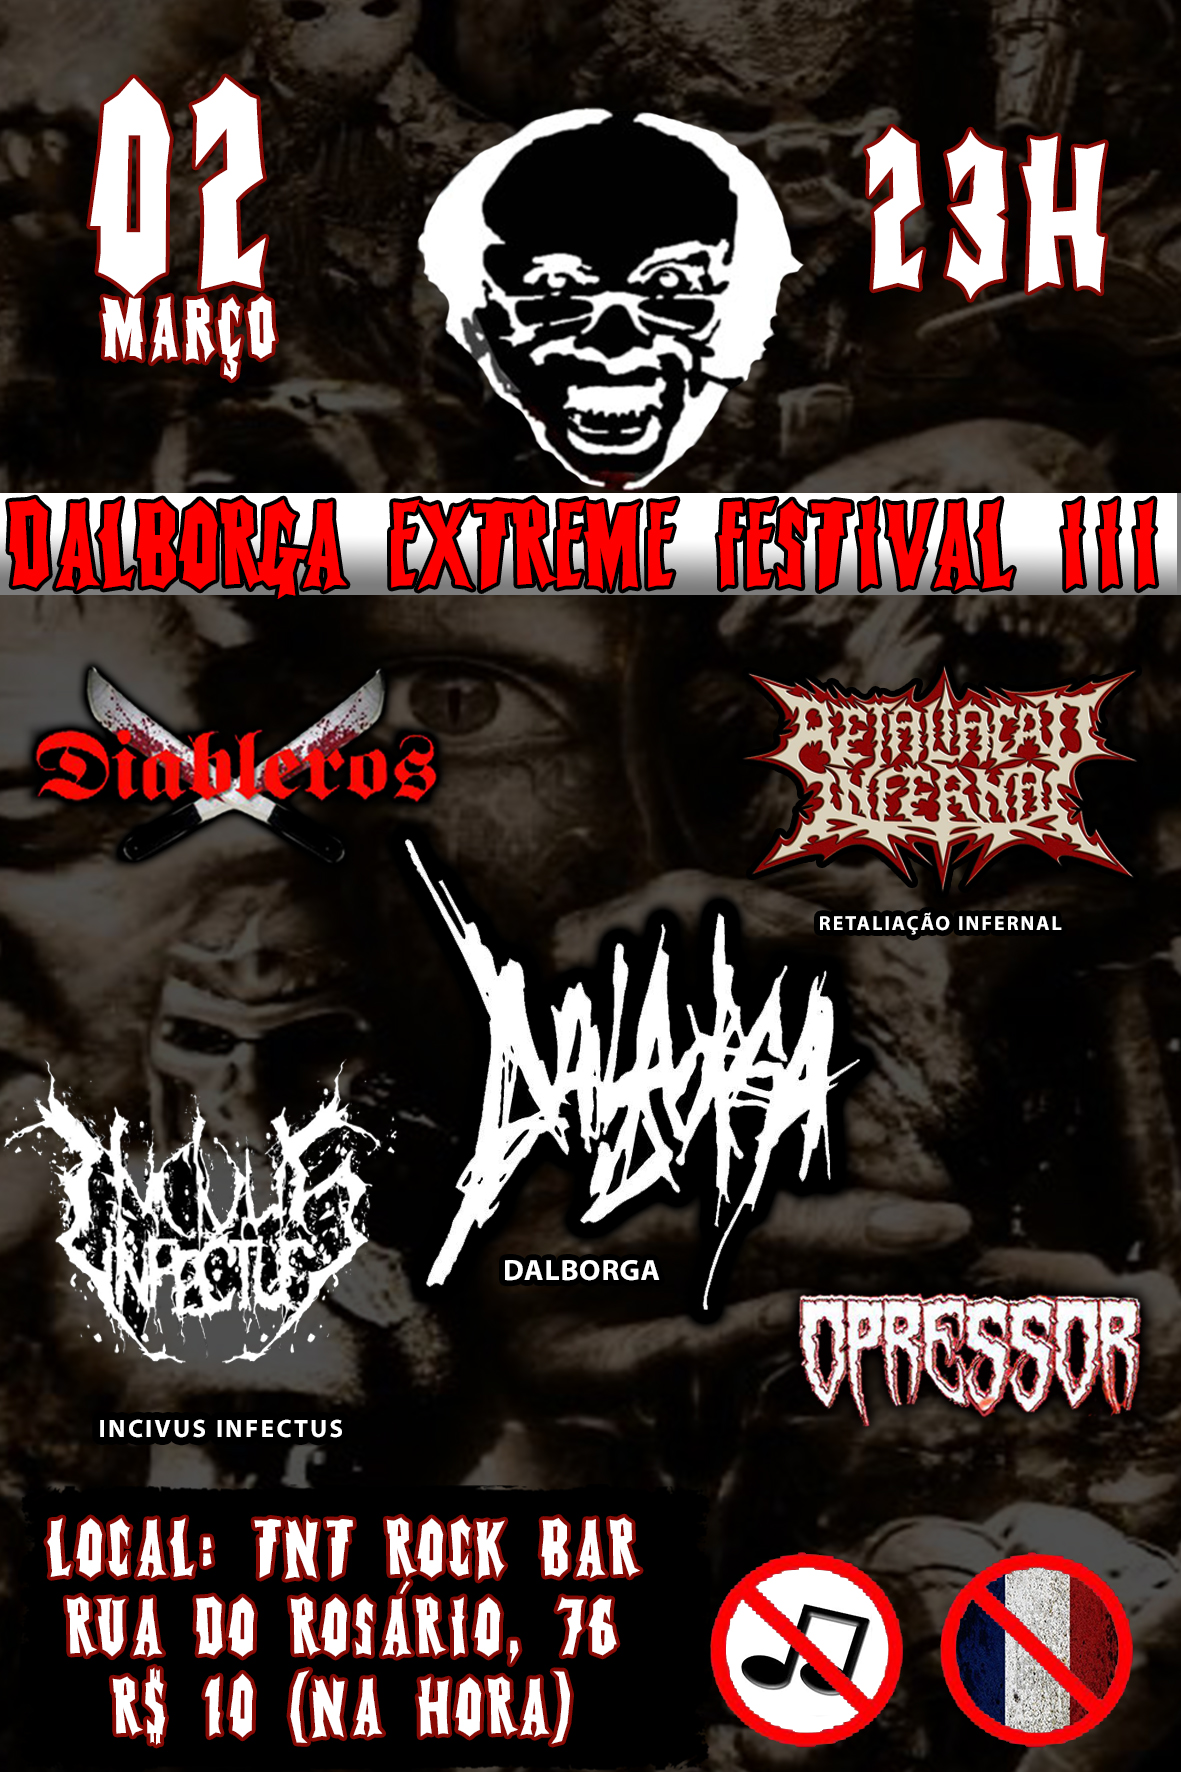 02/03 – Dalborga Extreme Festival III